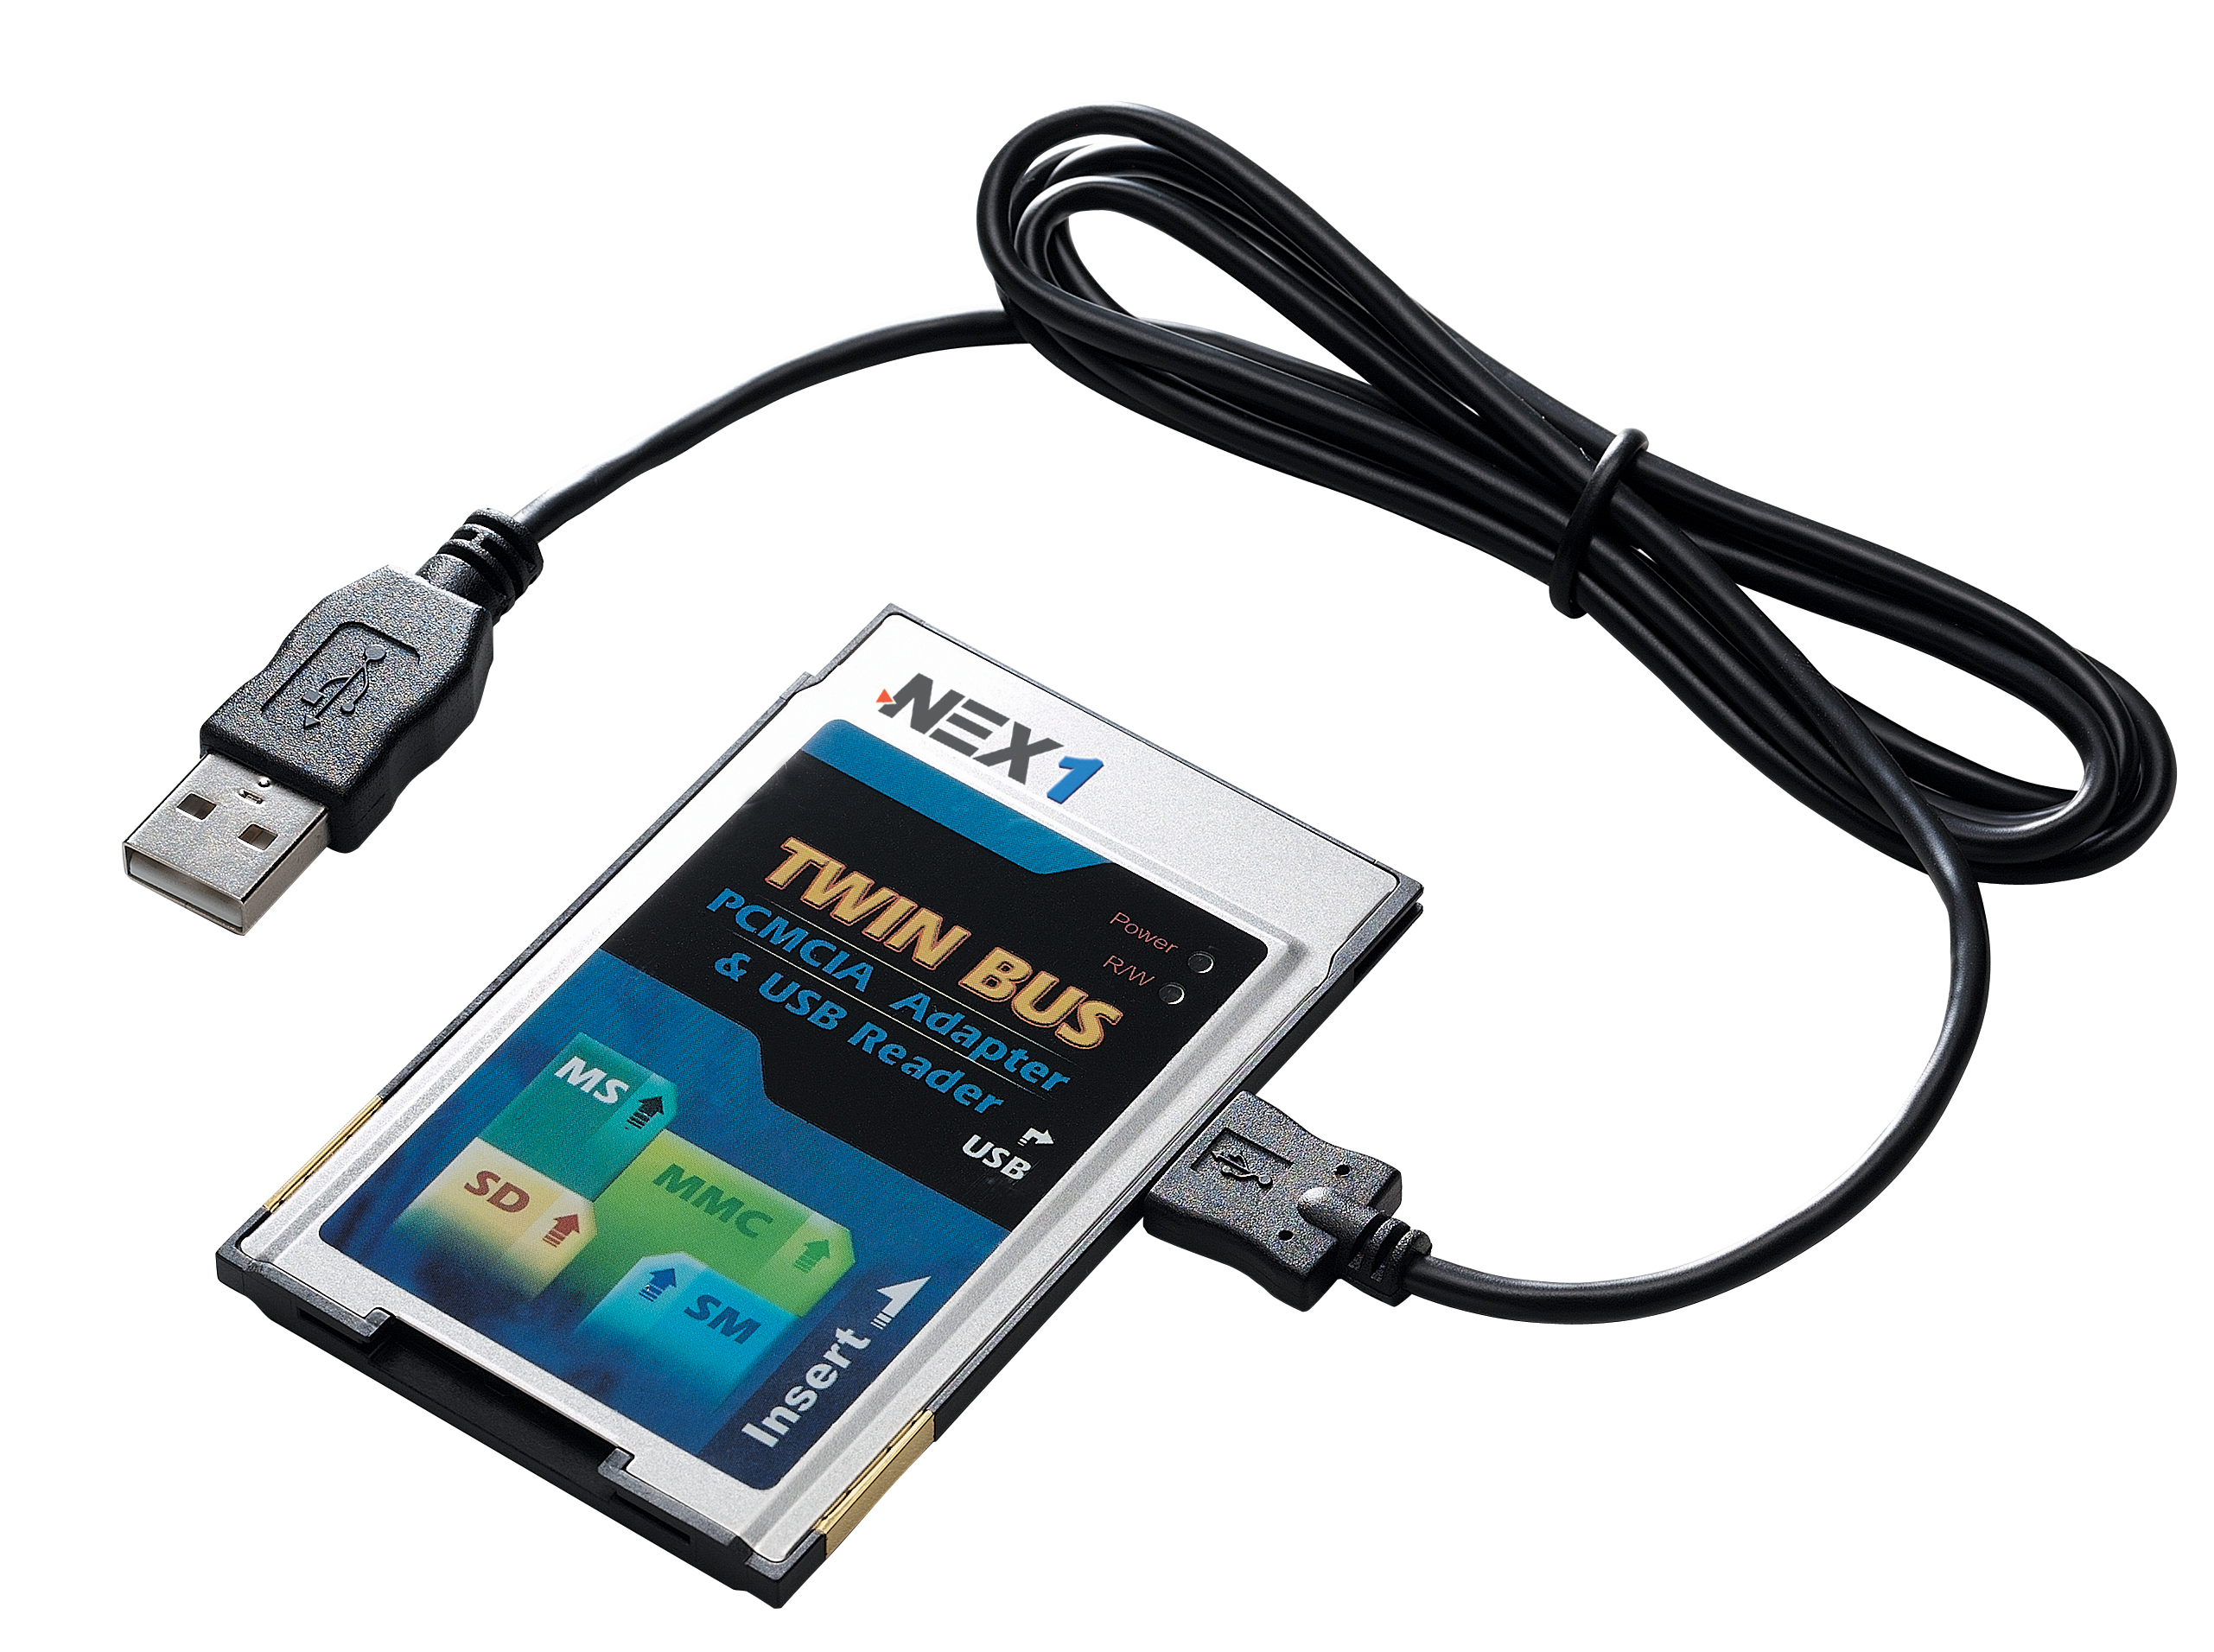 slange Brandy Konsekvenser TB-5 5-in-1 PCMCIA/USB Twin Bus Card Reader